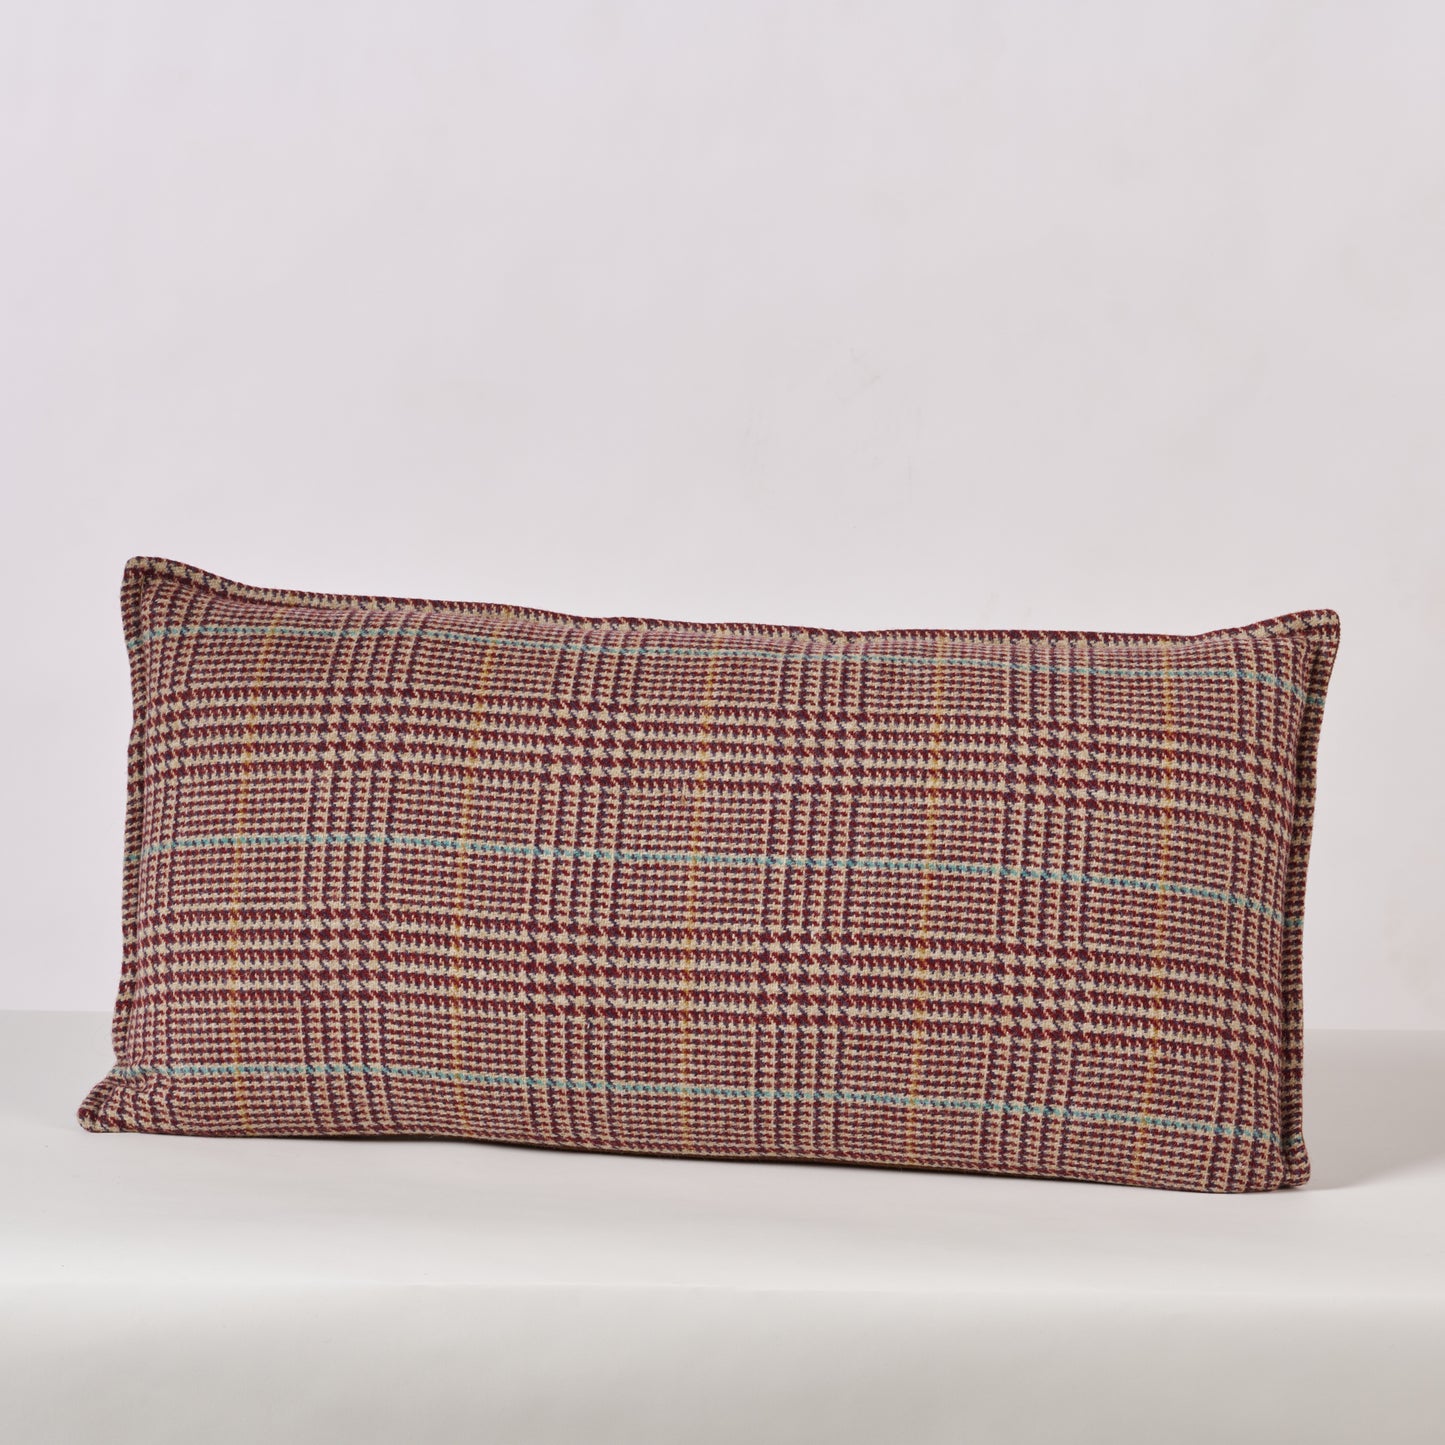 Rustic Pillow 16"x32"